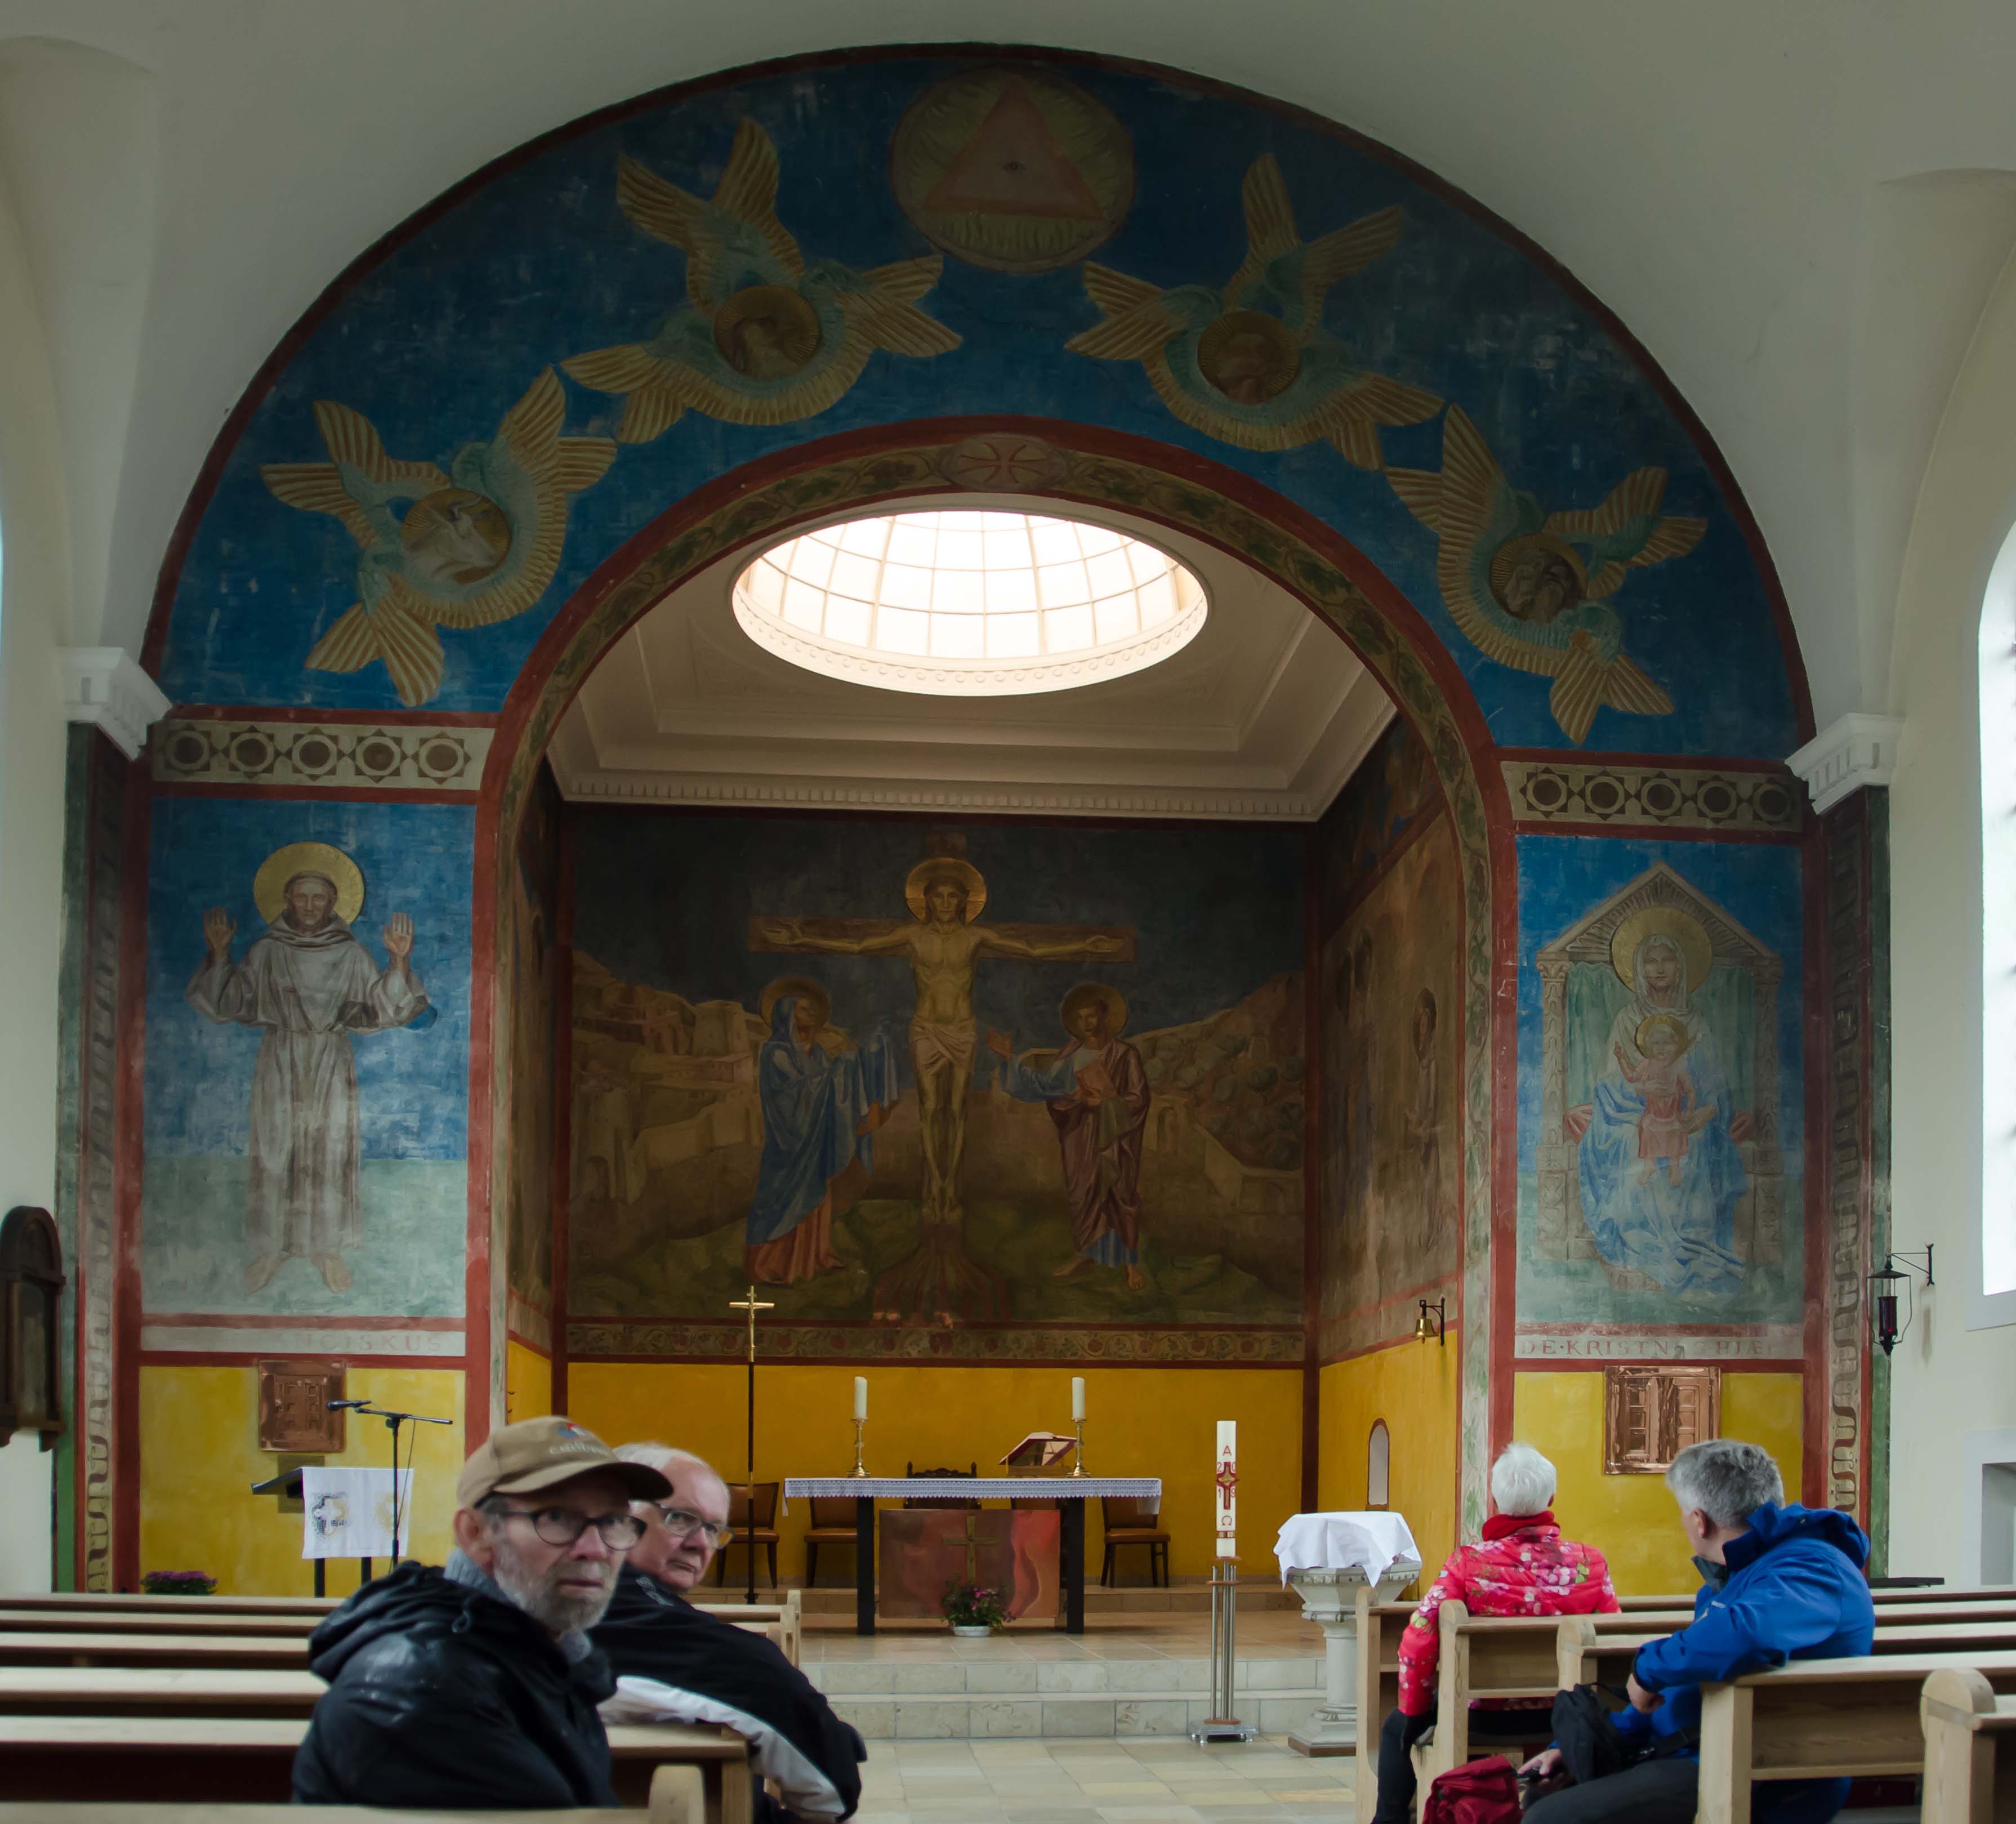 Altertavlen i den katolske kirke i Nakskov